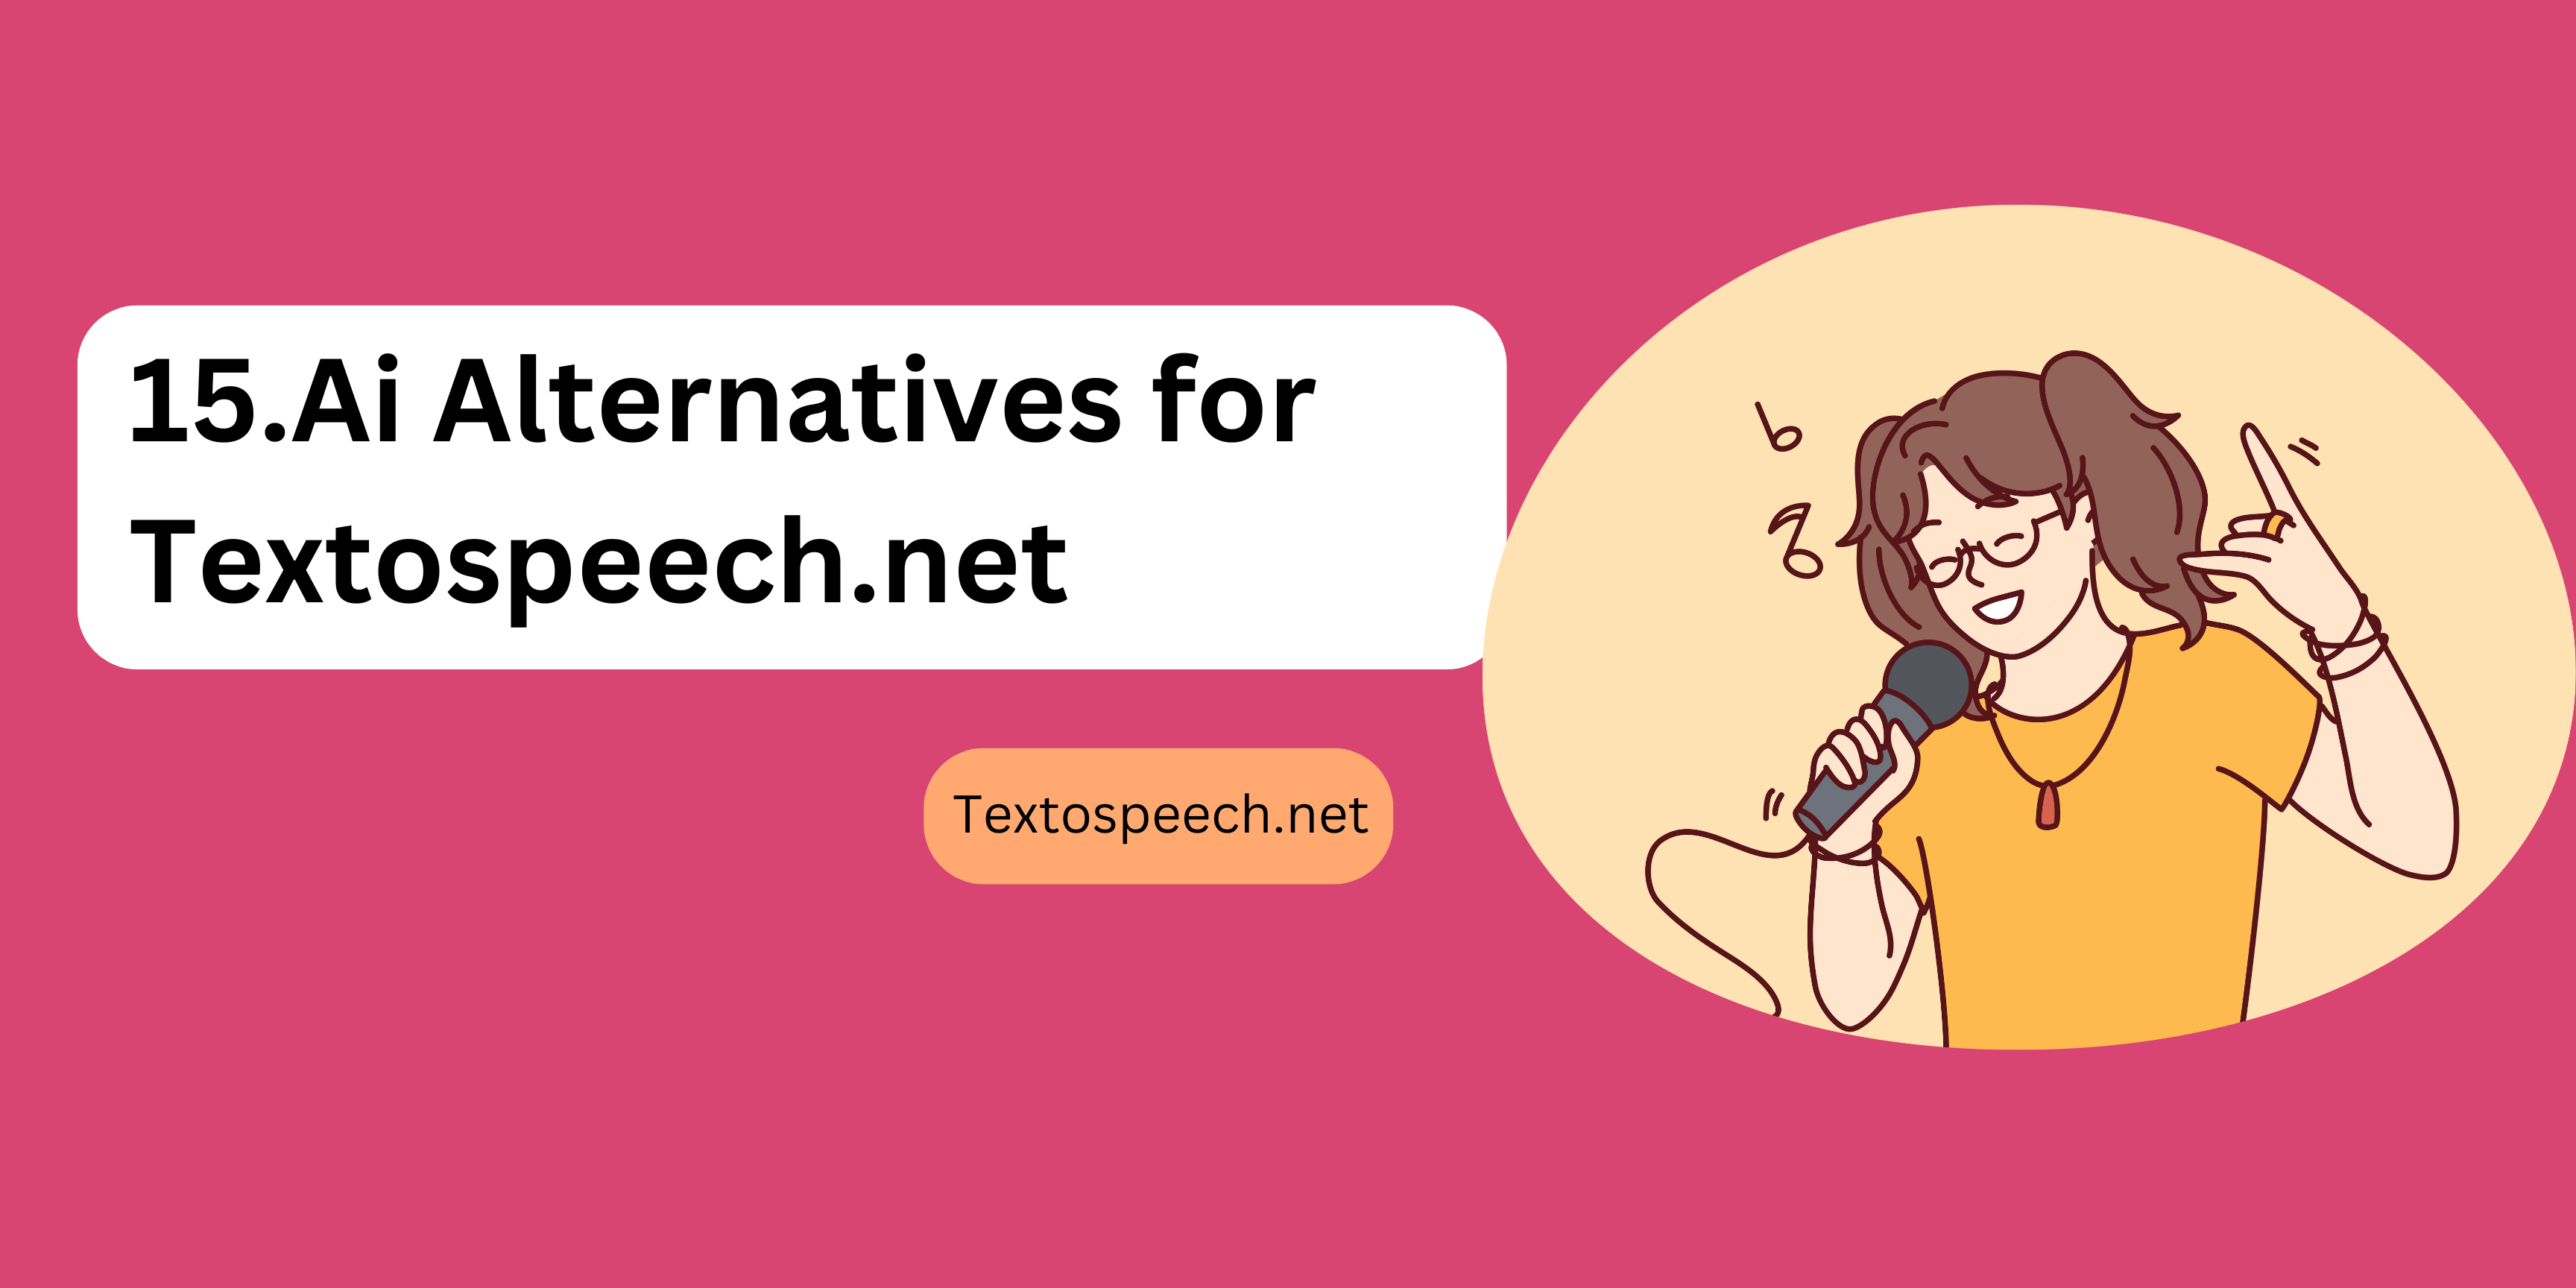 15.Ai Alternatives for Textospeech.net